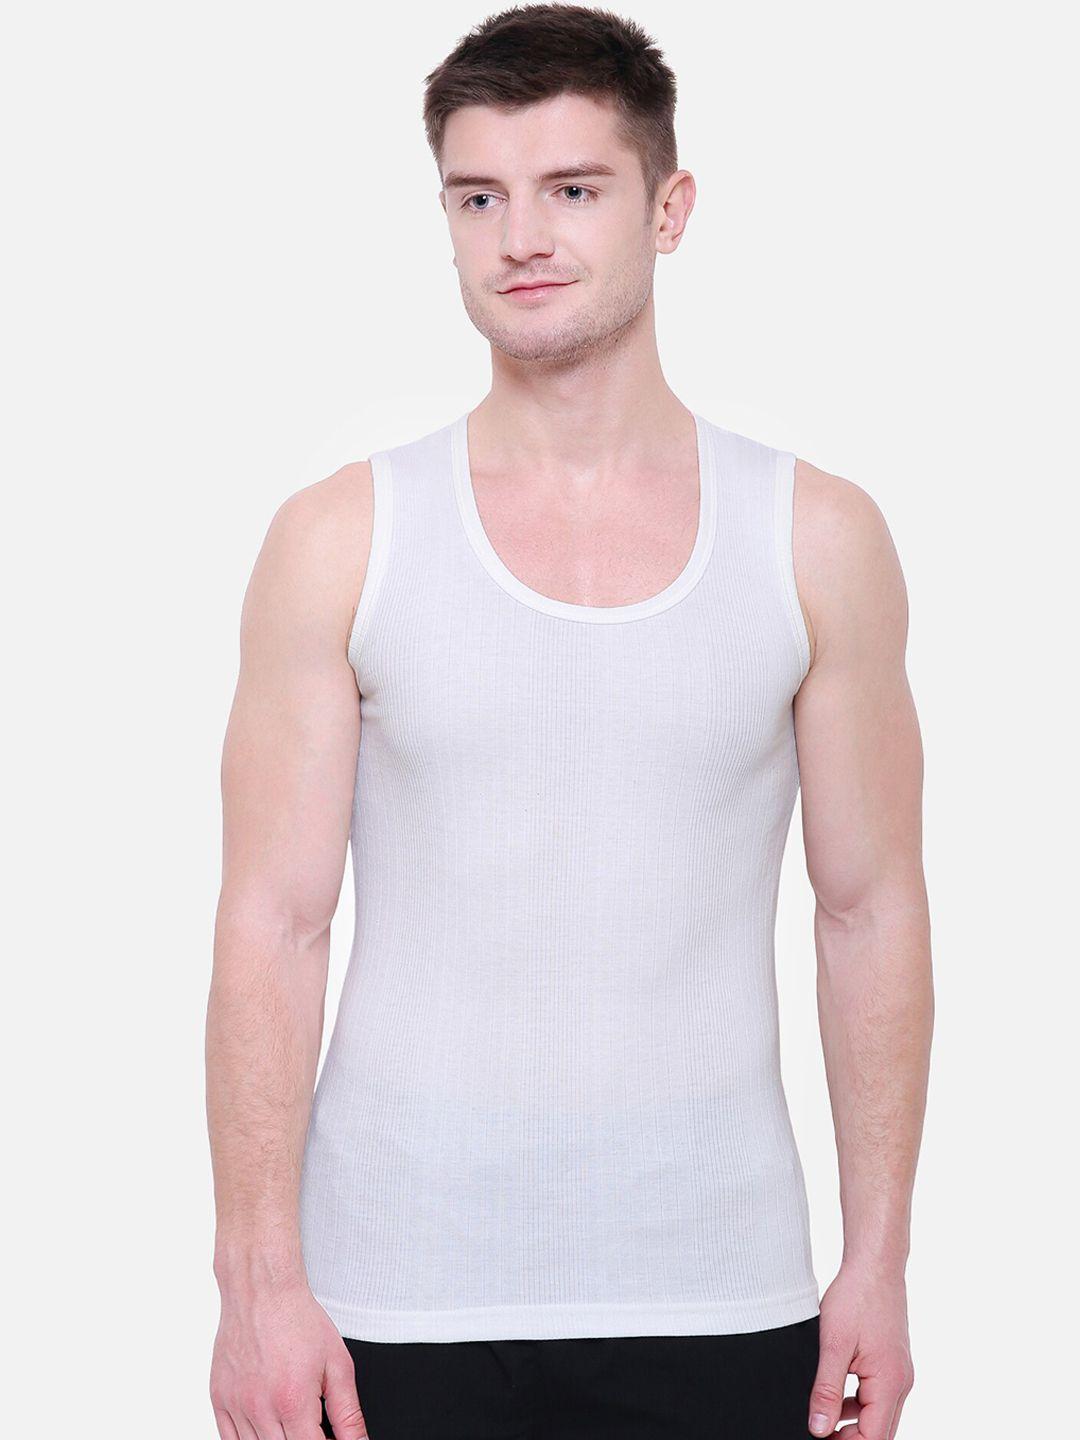 bodycare insider men white solid thermal t-shirt